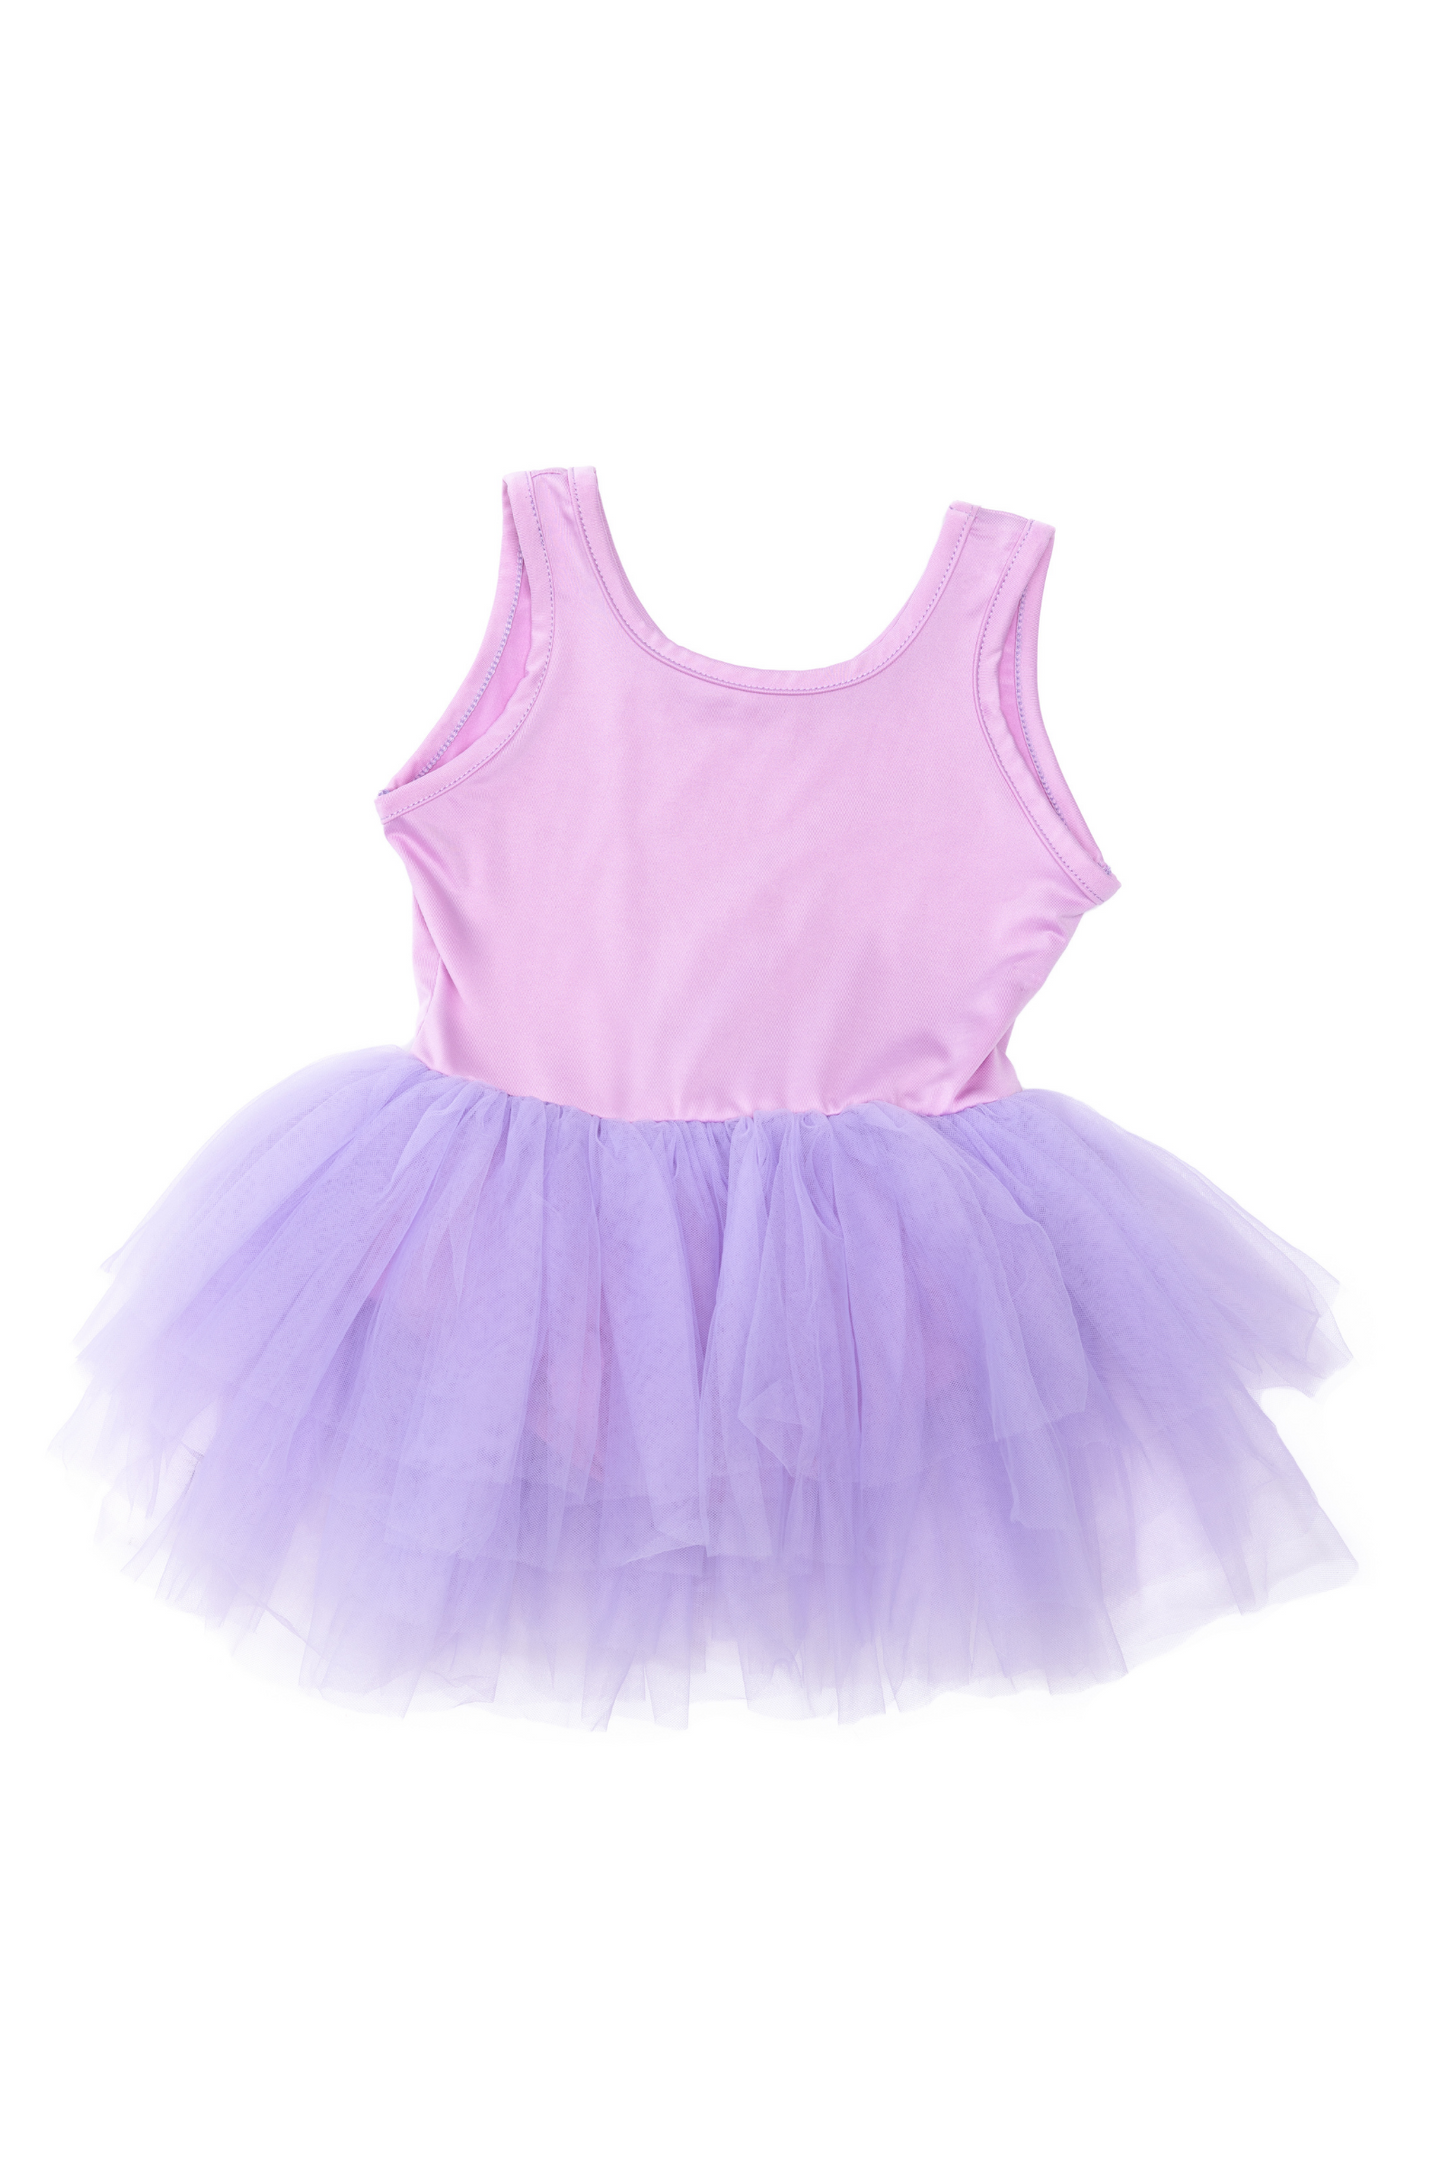 Ballet Tutu Dress Size 3-4